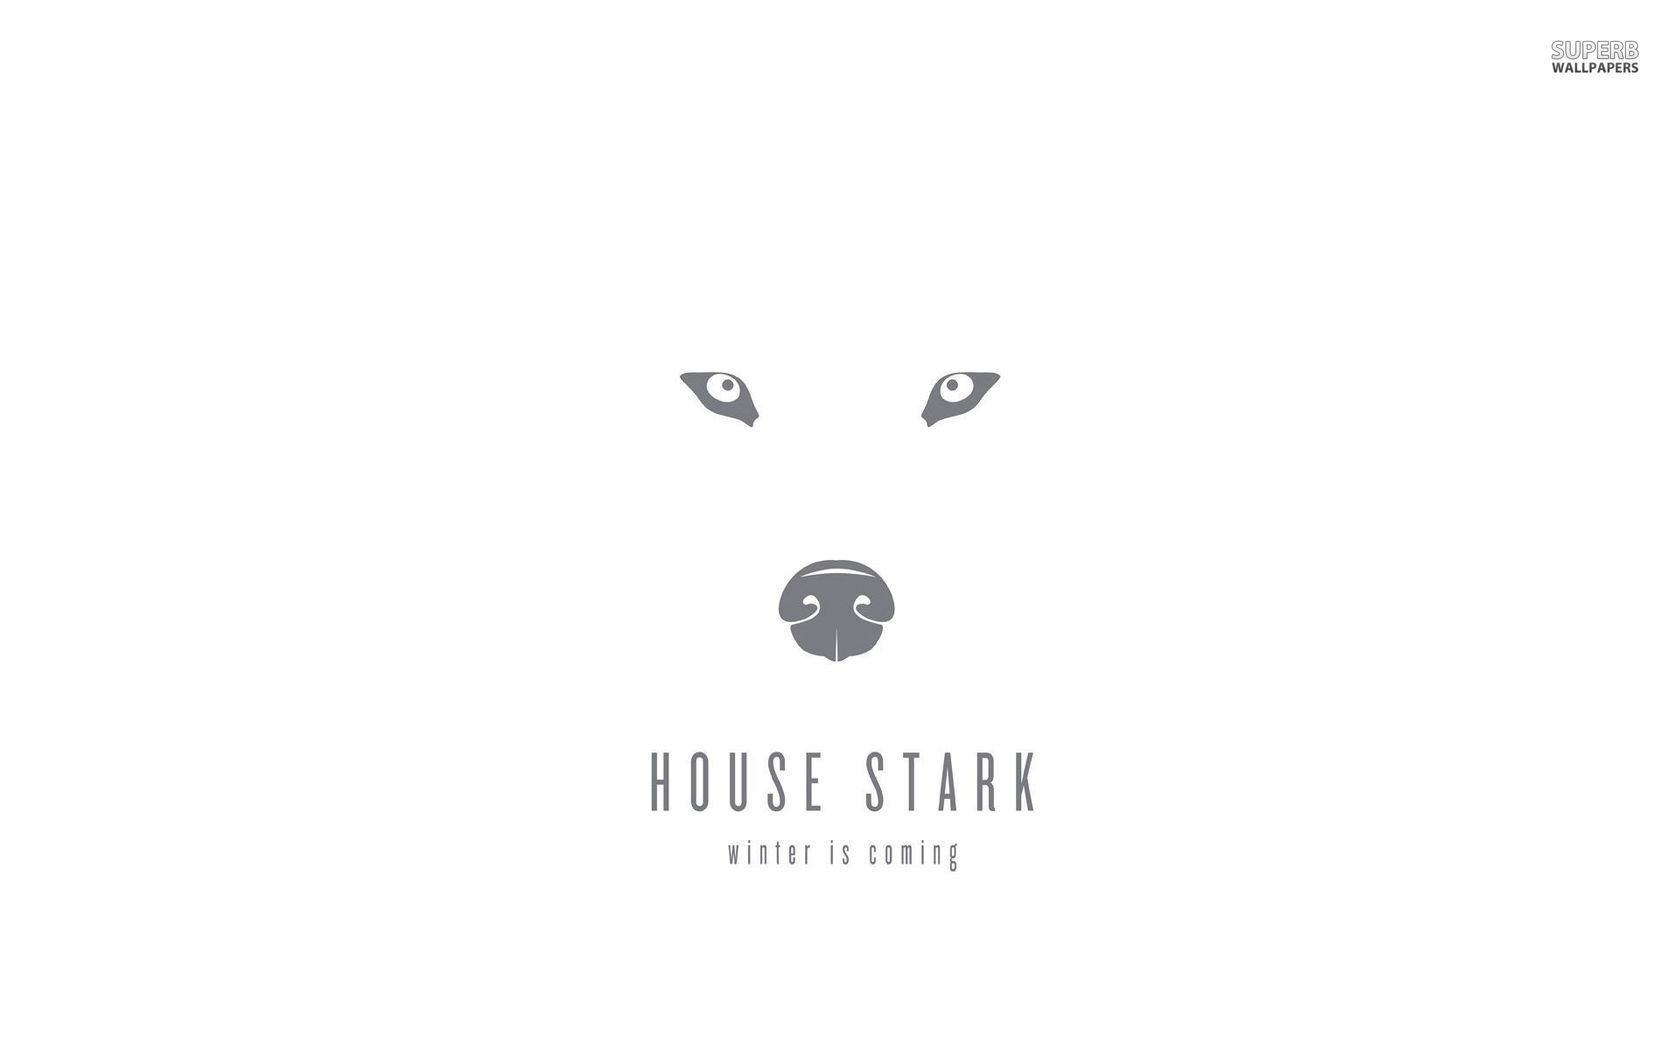 House Stark wallpaper - Minimalistic wallpapers